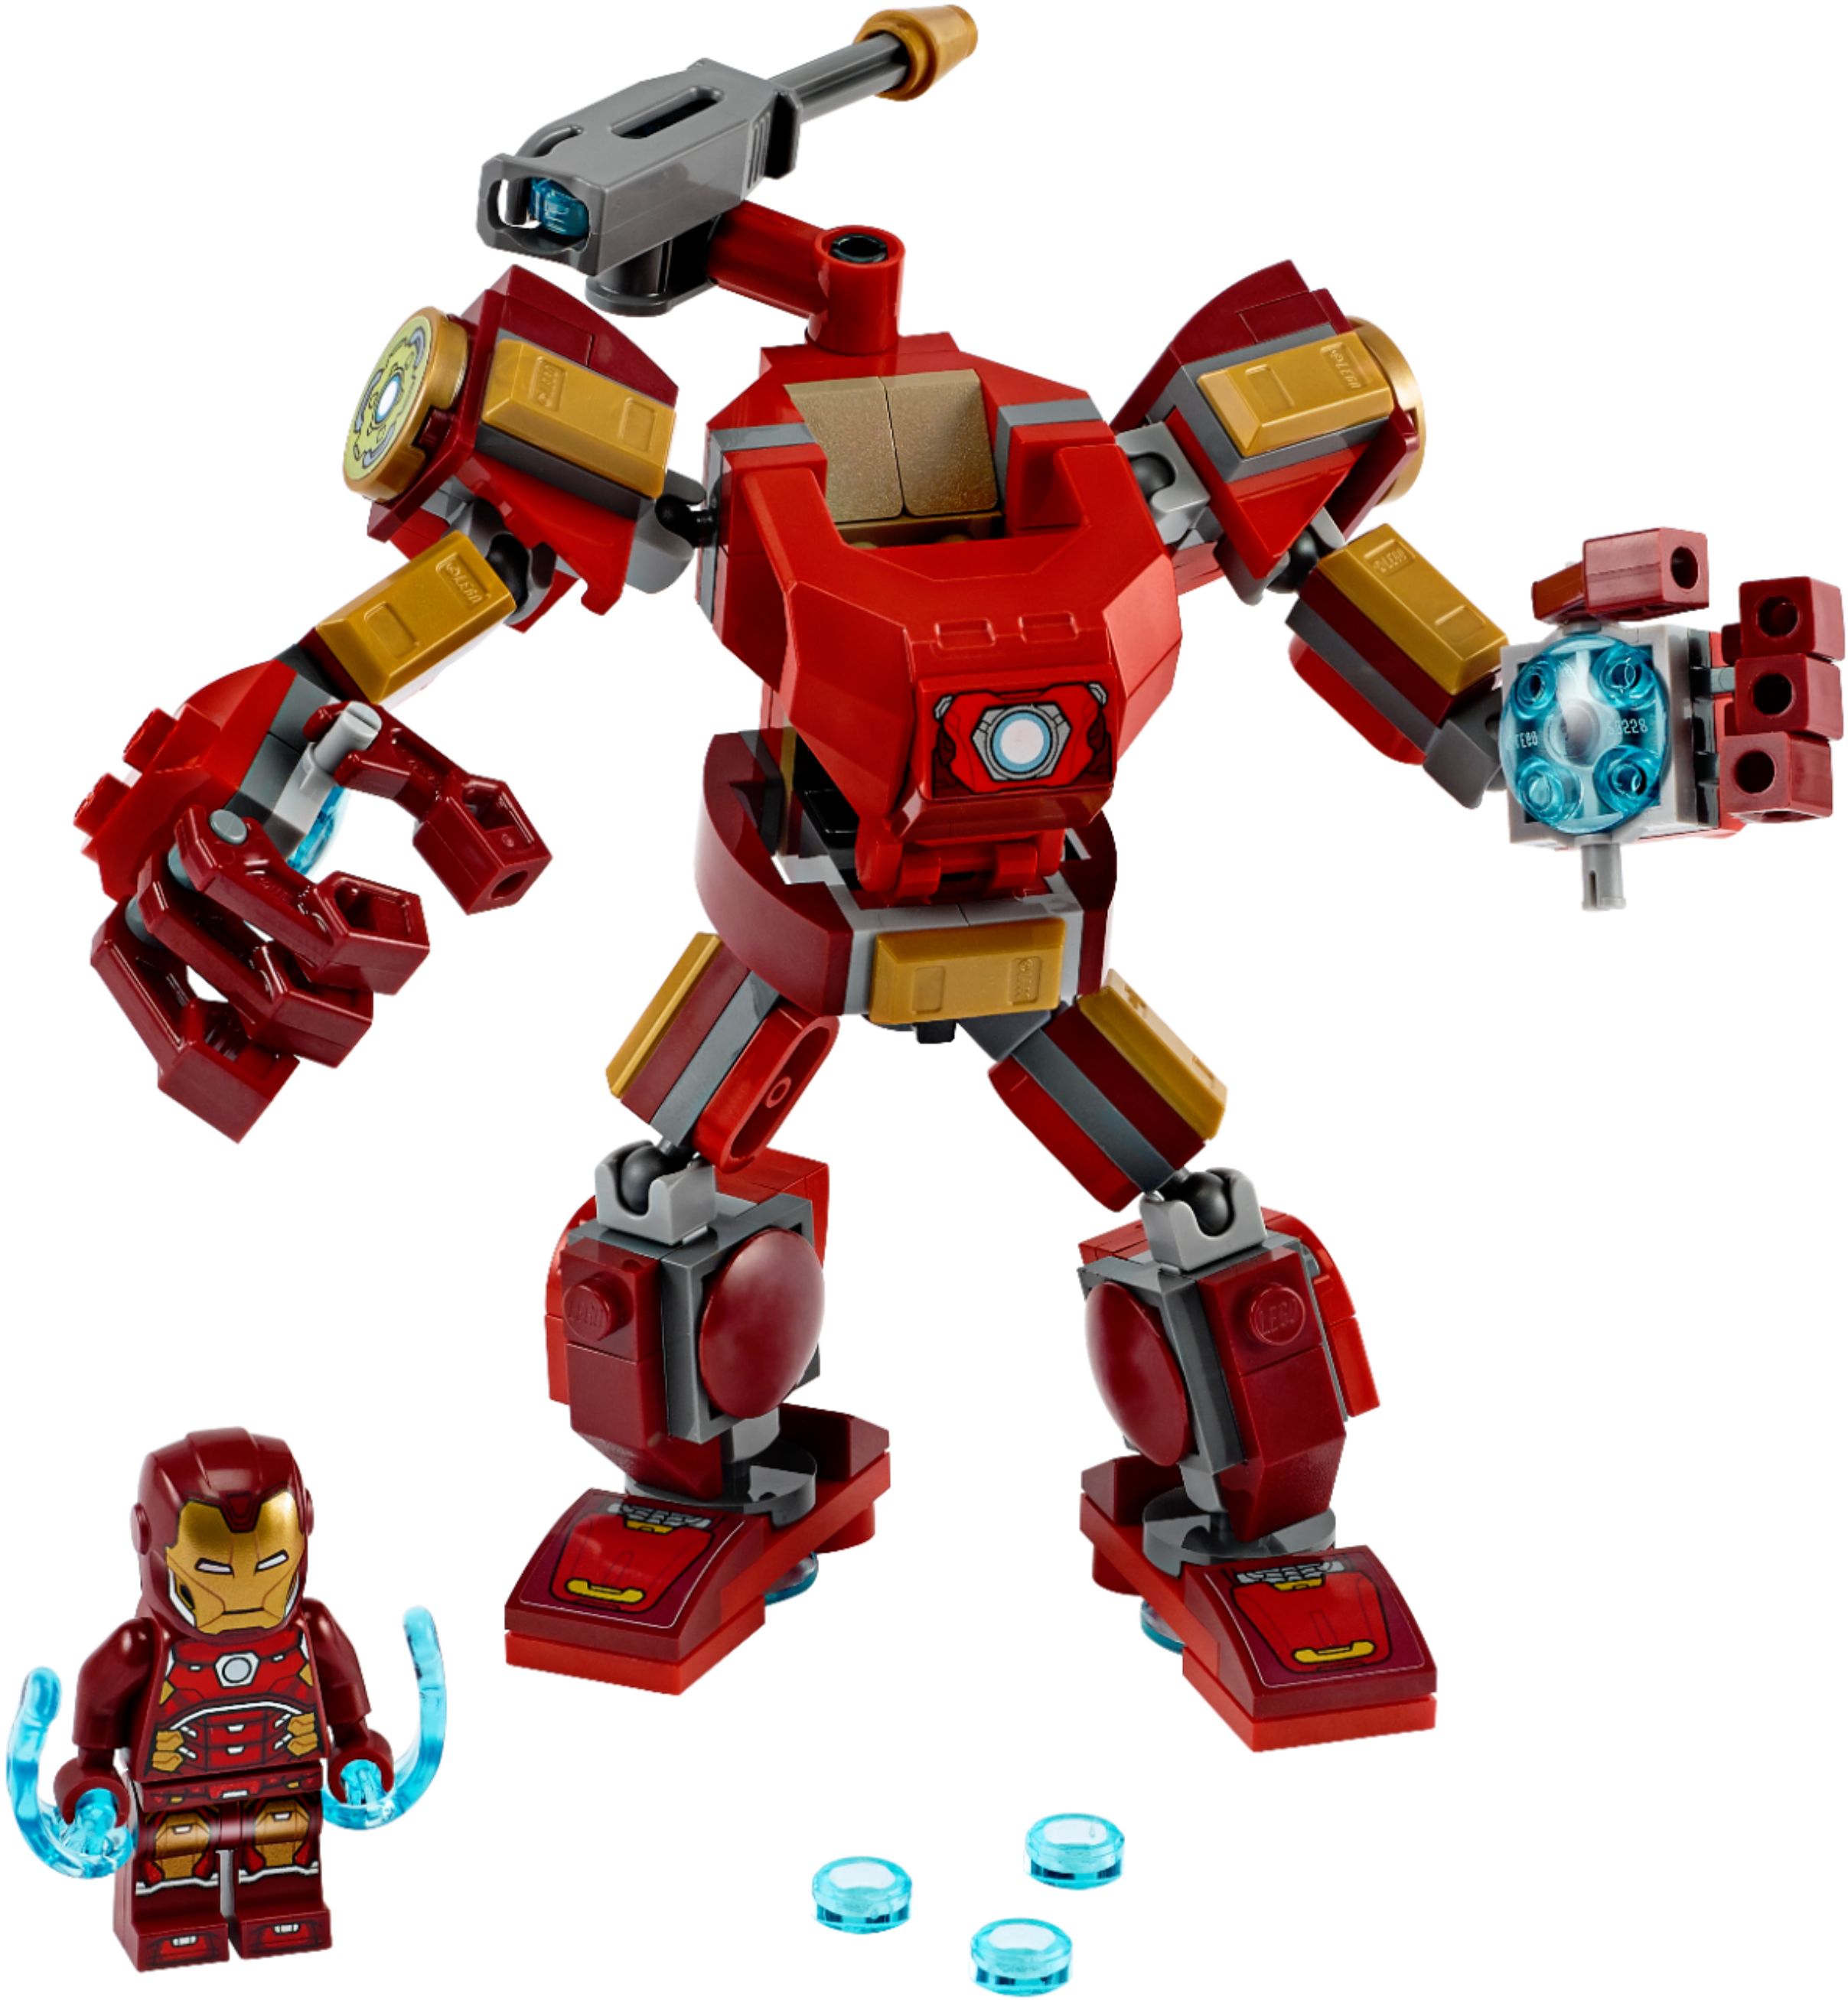 Best Buy: LEGO Marvel Super Heroes Iron Man Hall of Armor 76125 76125